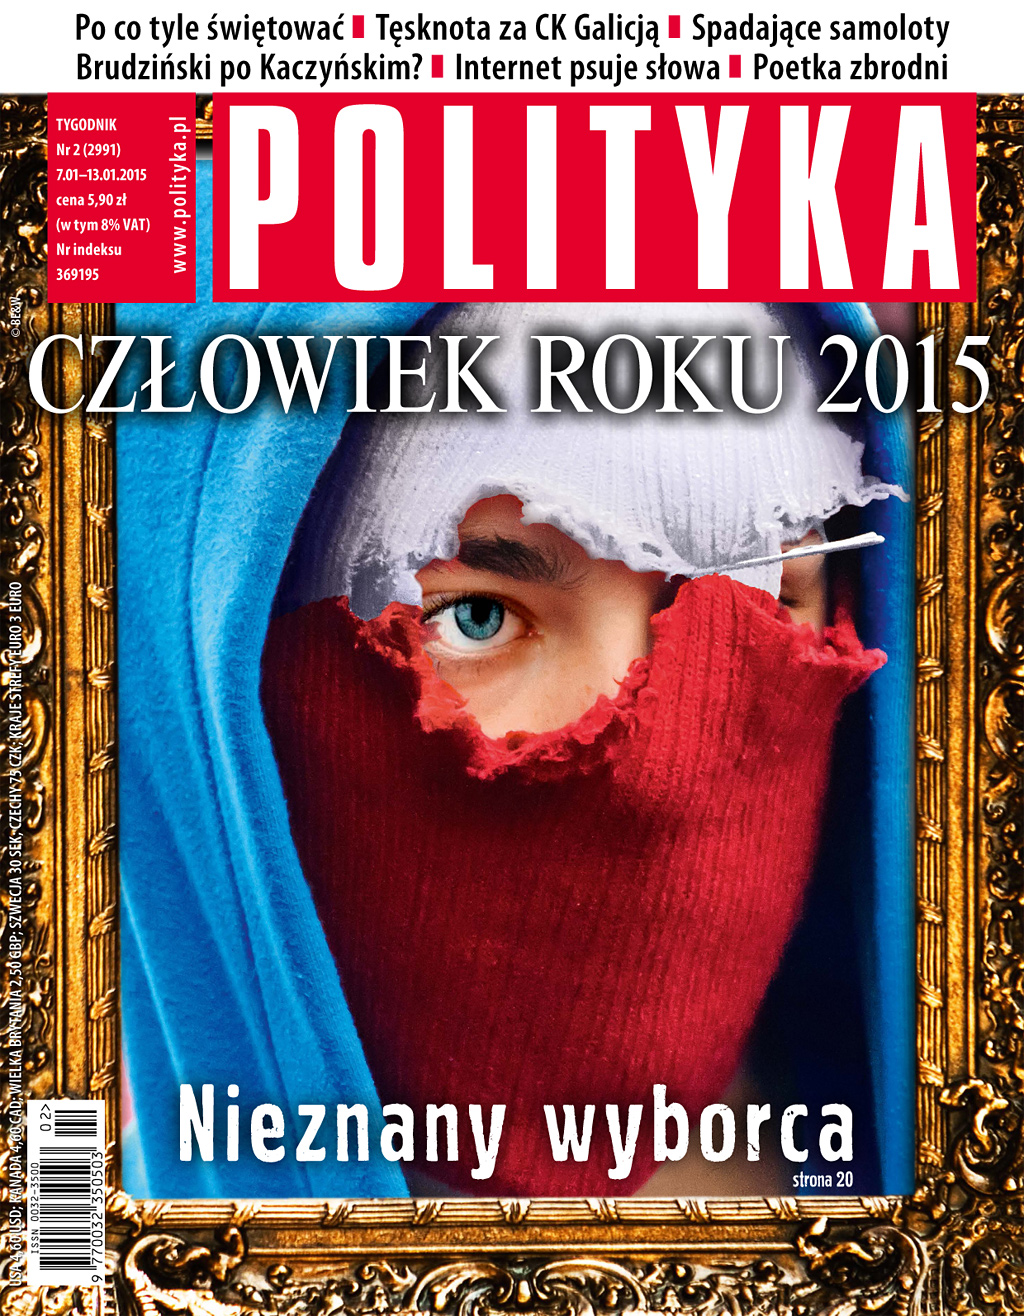 Polityka 22015 Cover Politykapl 6242